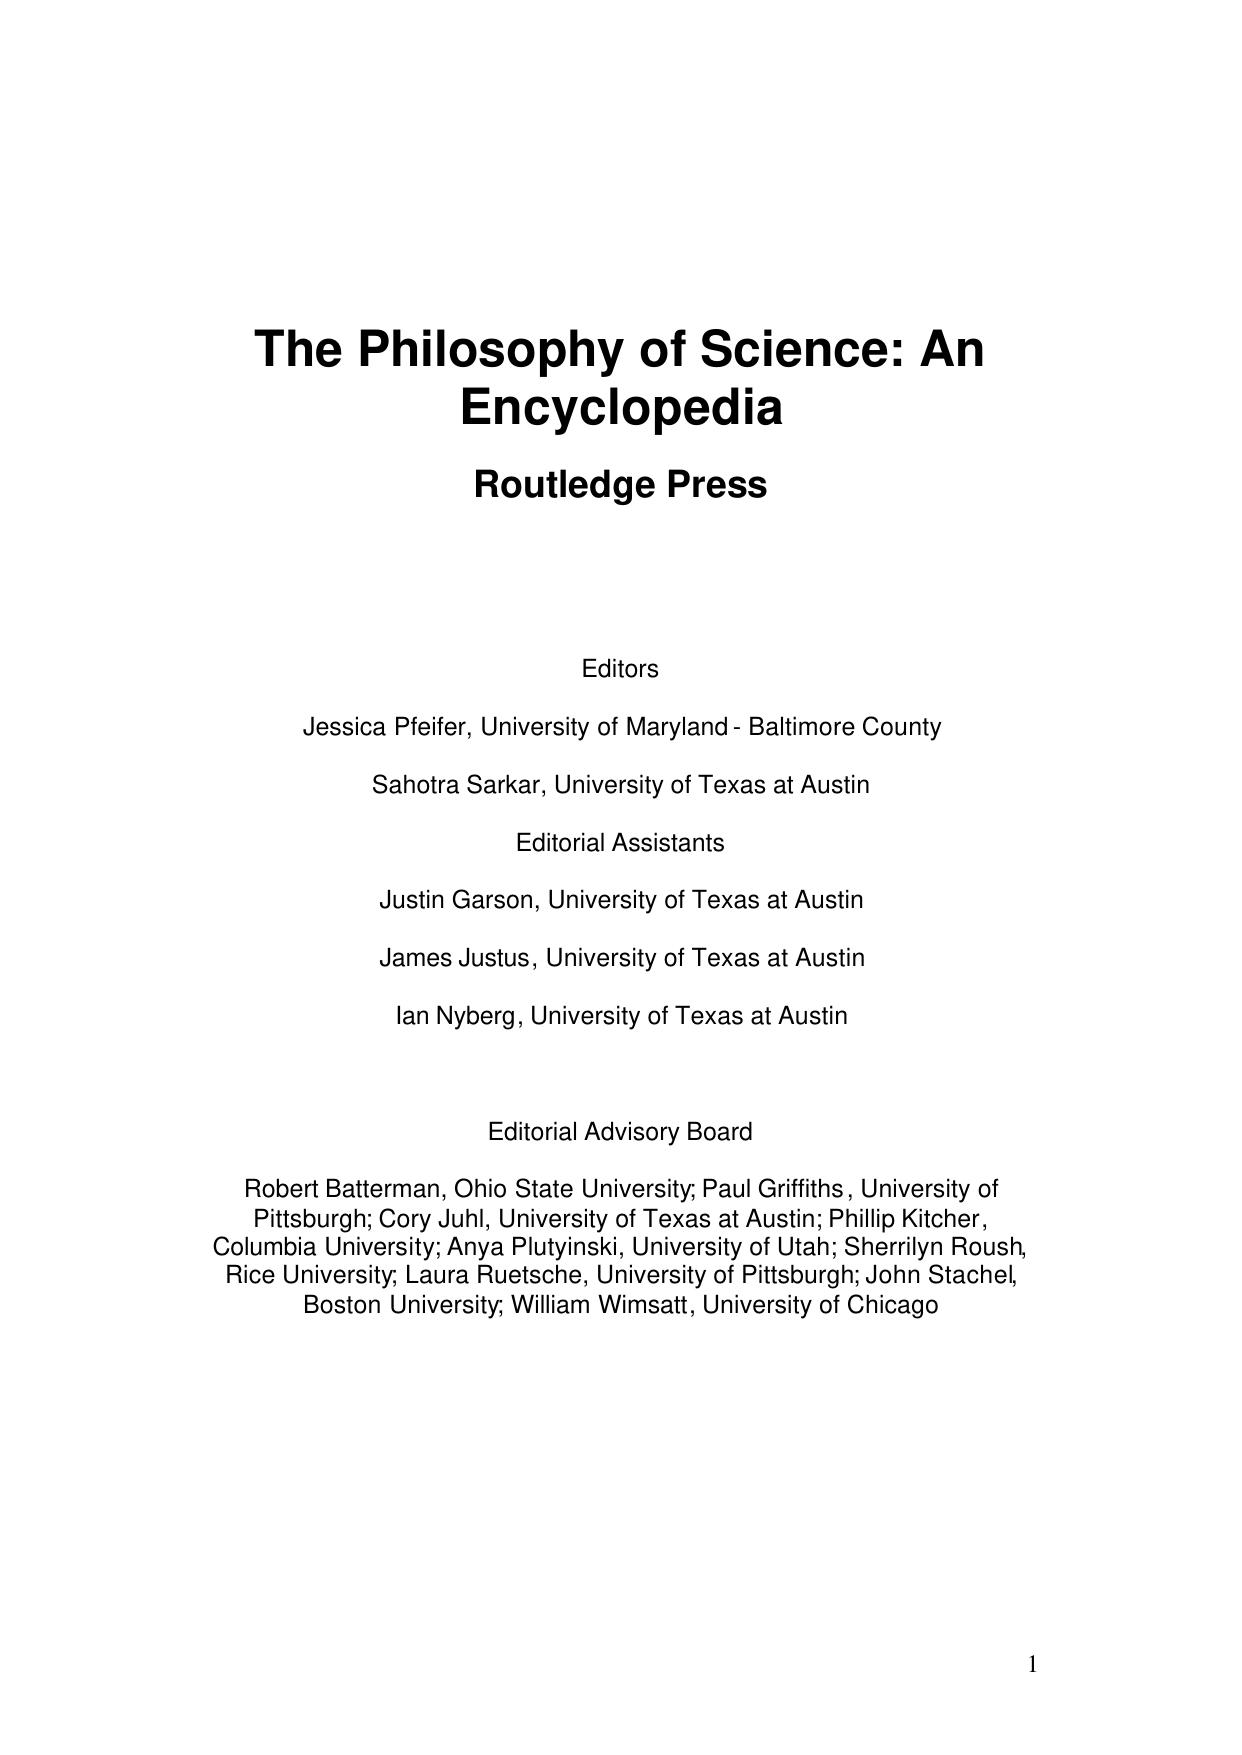 The Philosoph of Science - An Encyclopedia - Summary